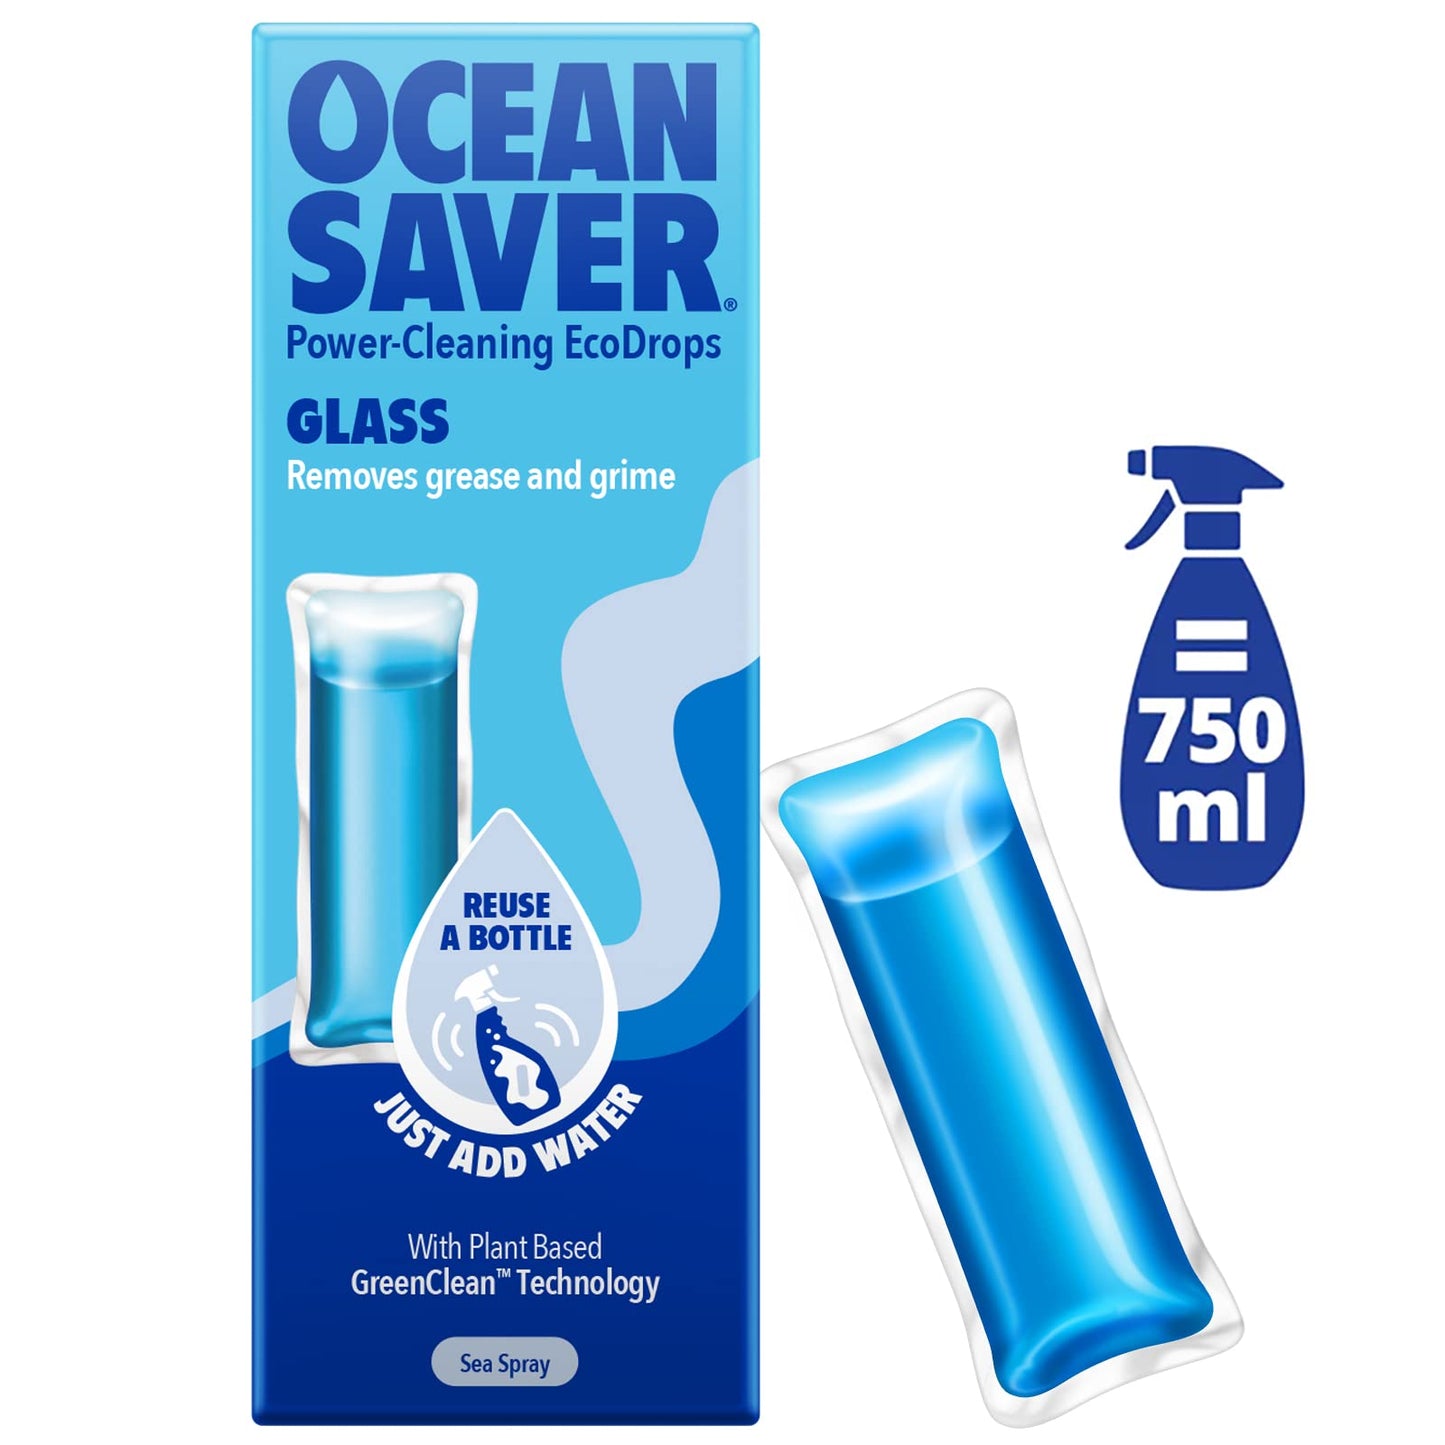 Ocean Saver Pods - Glass Cleaner